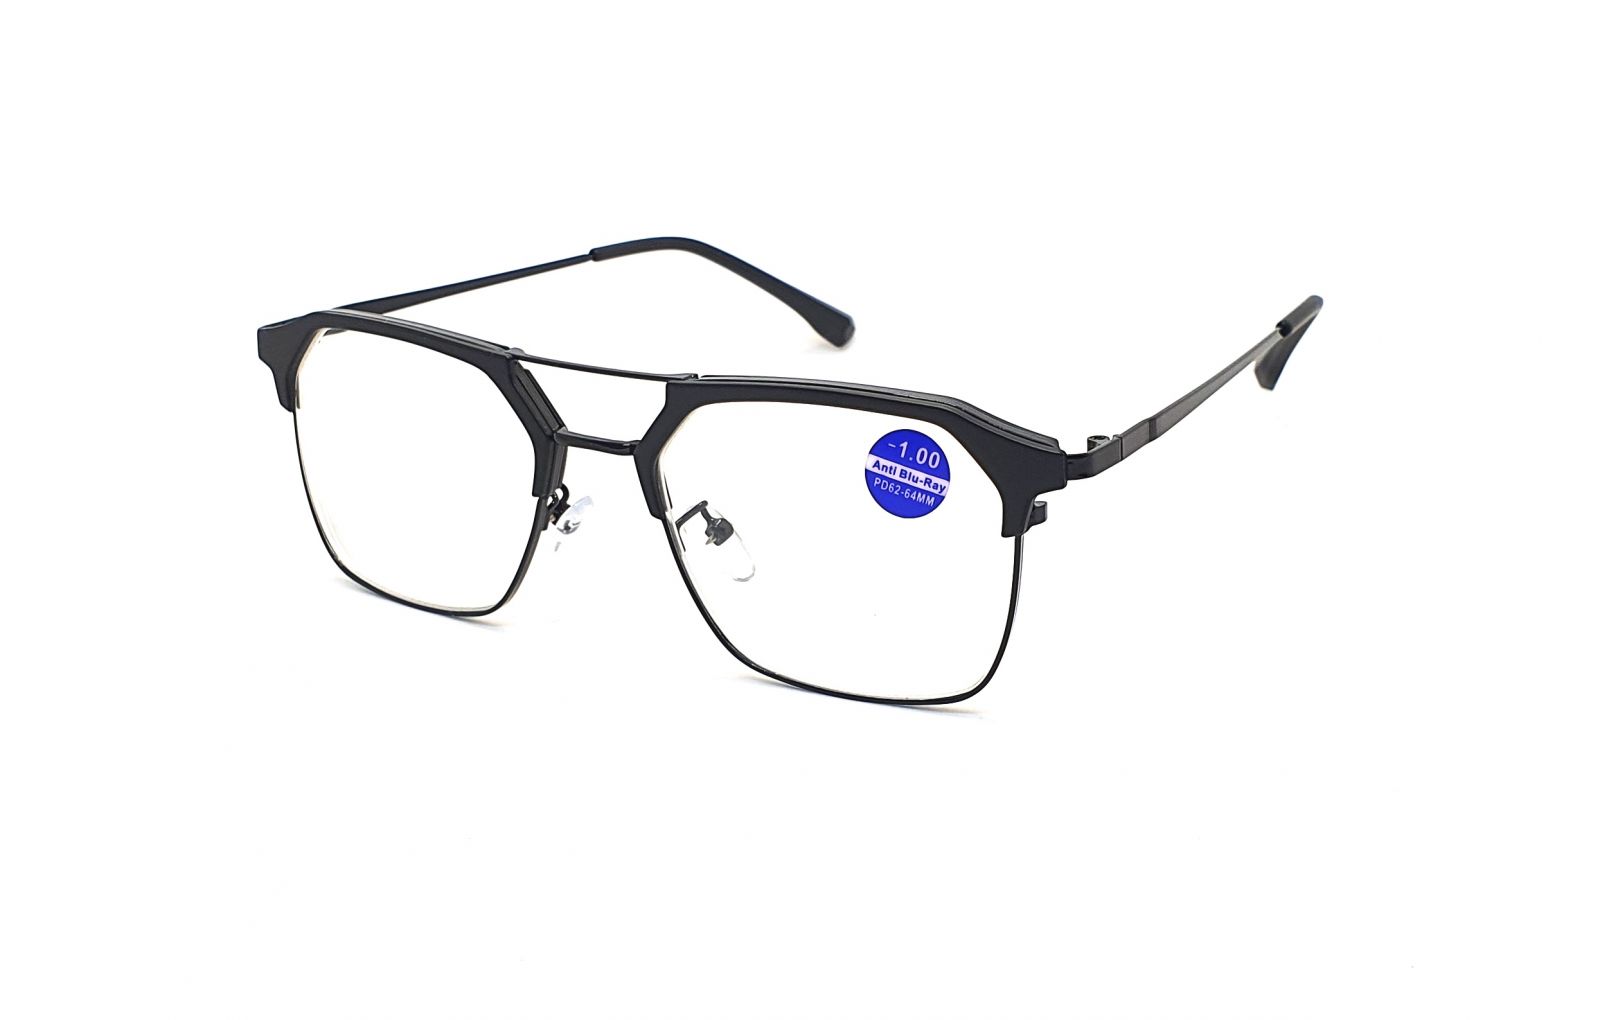 Samozabarvovací dioptrické brýle N06-03 /-3,00